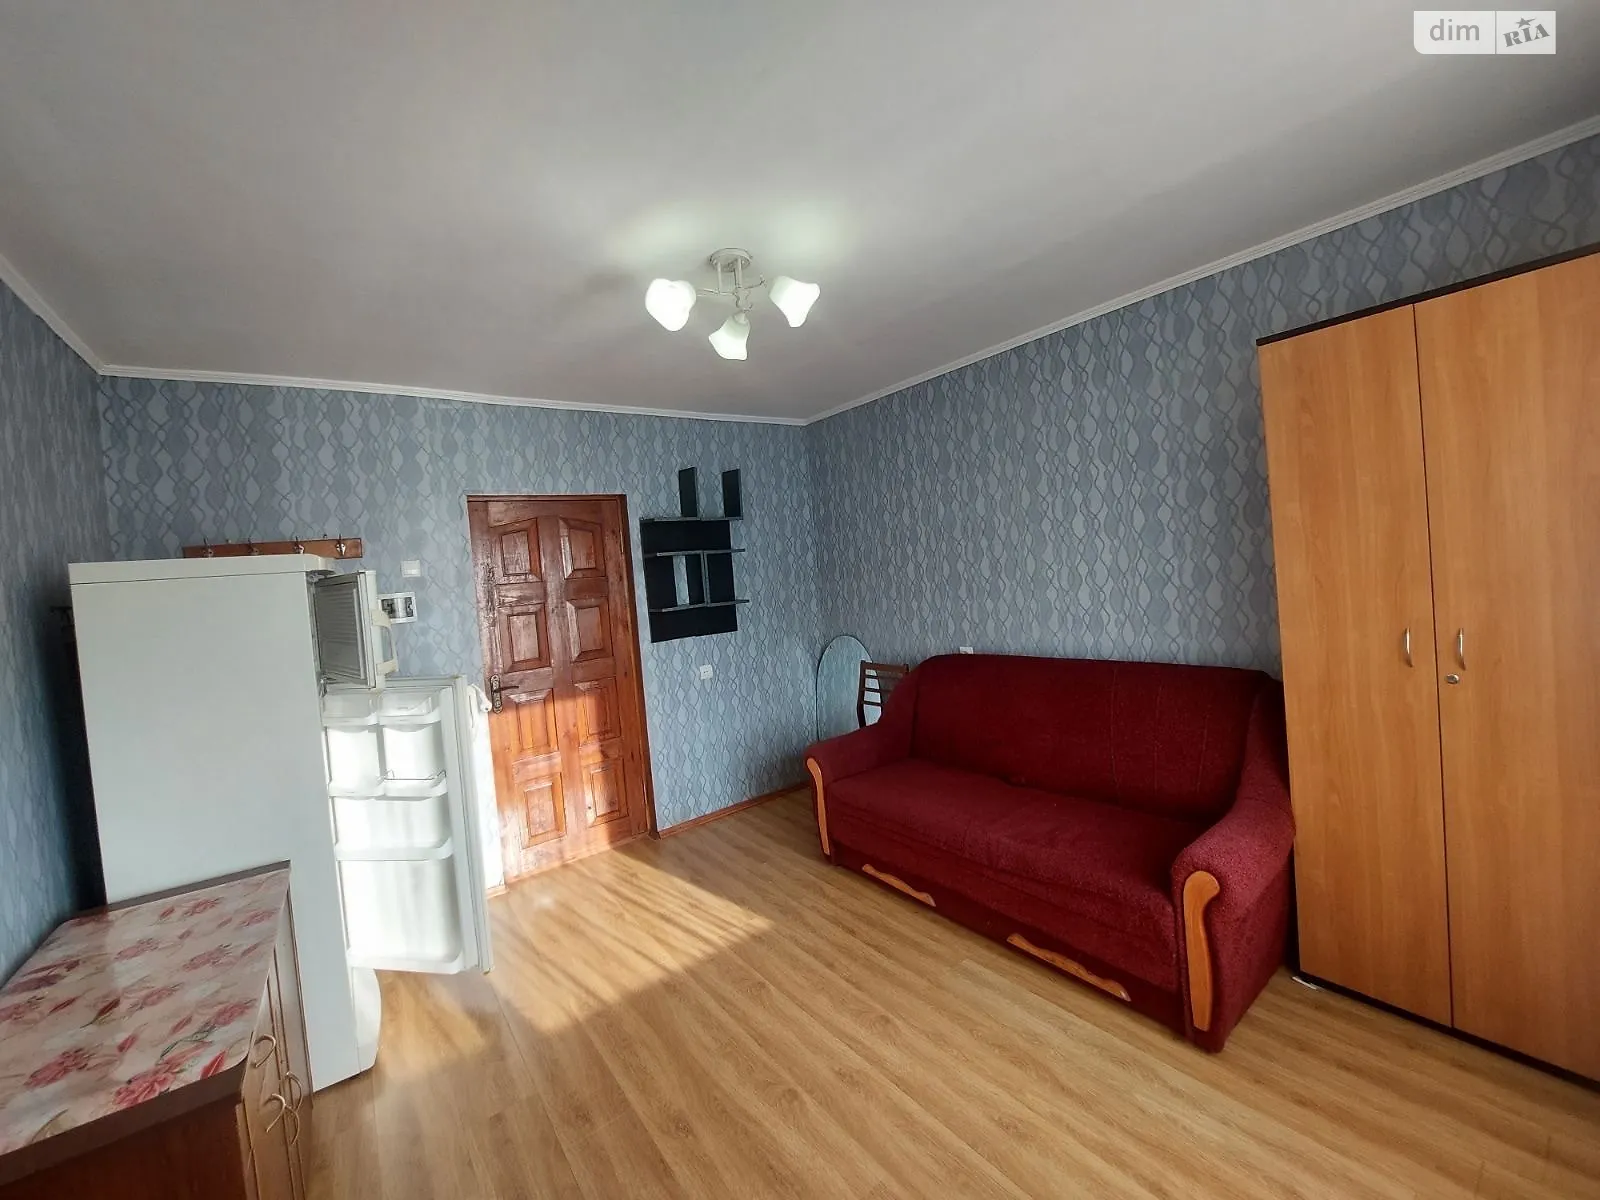 Продается комната 22 кв. м в Виннице, цена: 14500 $ - фото 1